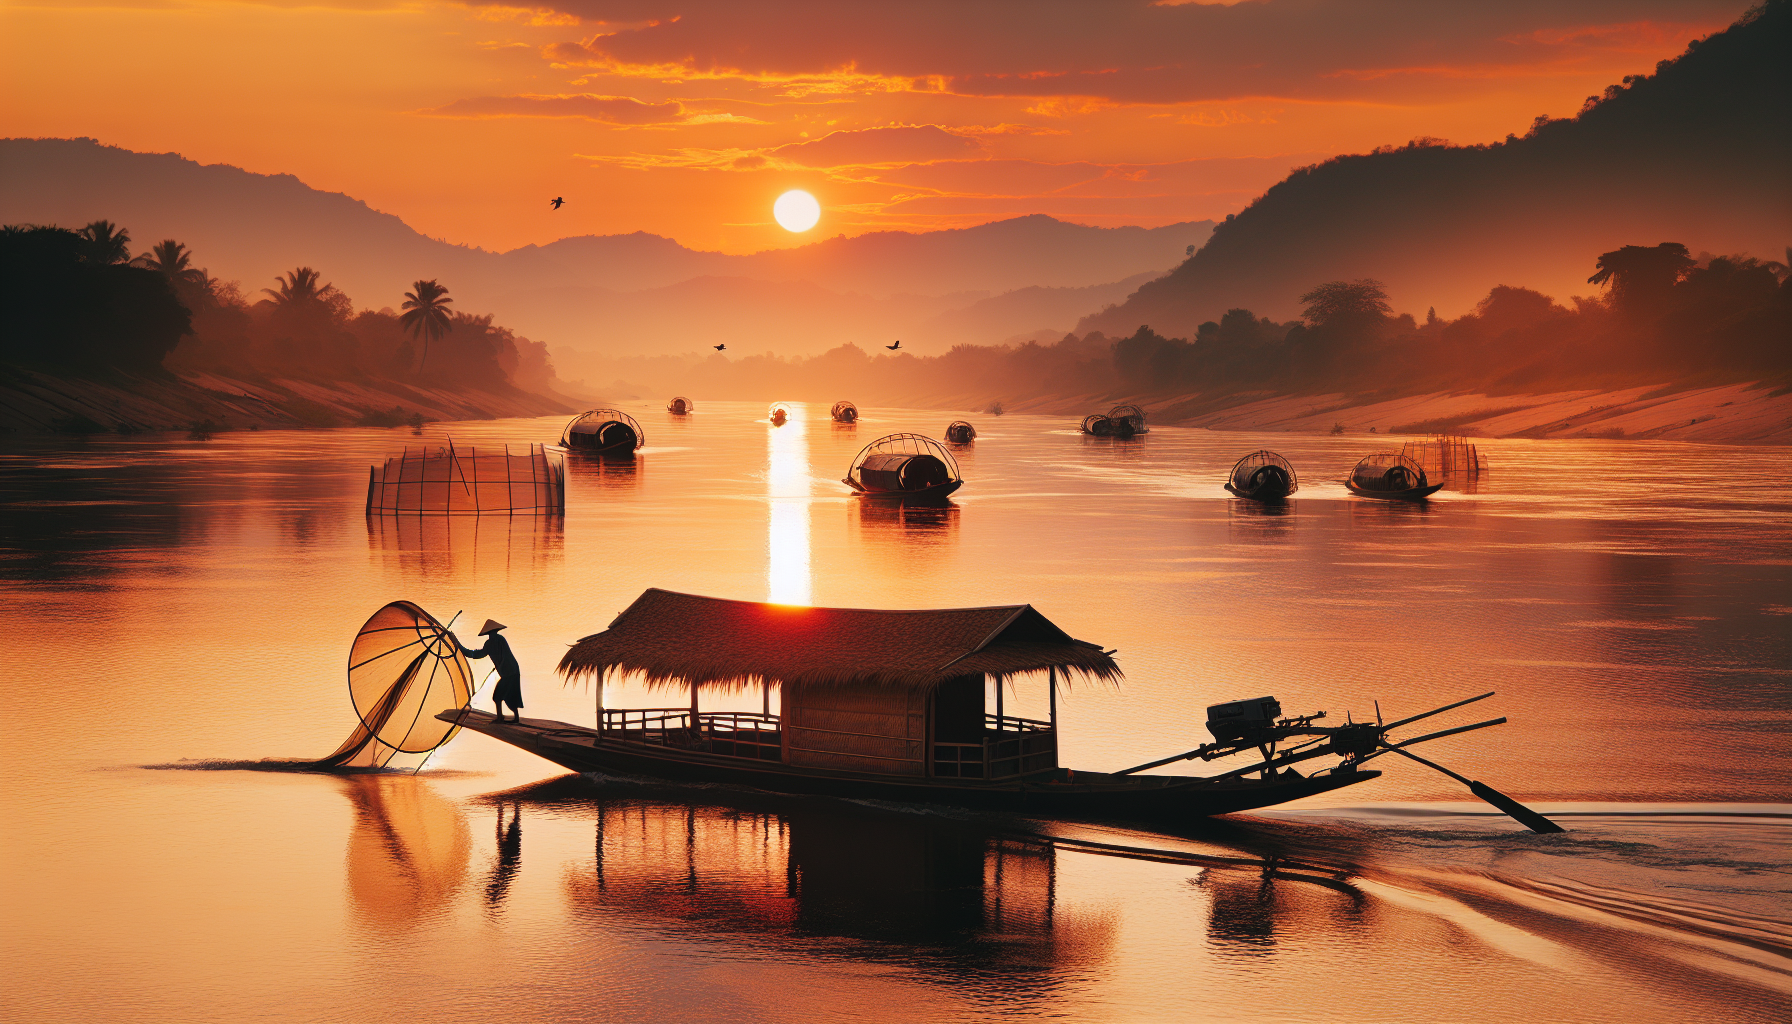 Sunset cruise on the Mekong River in Luang Prabang